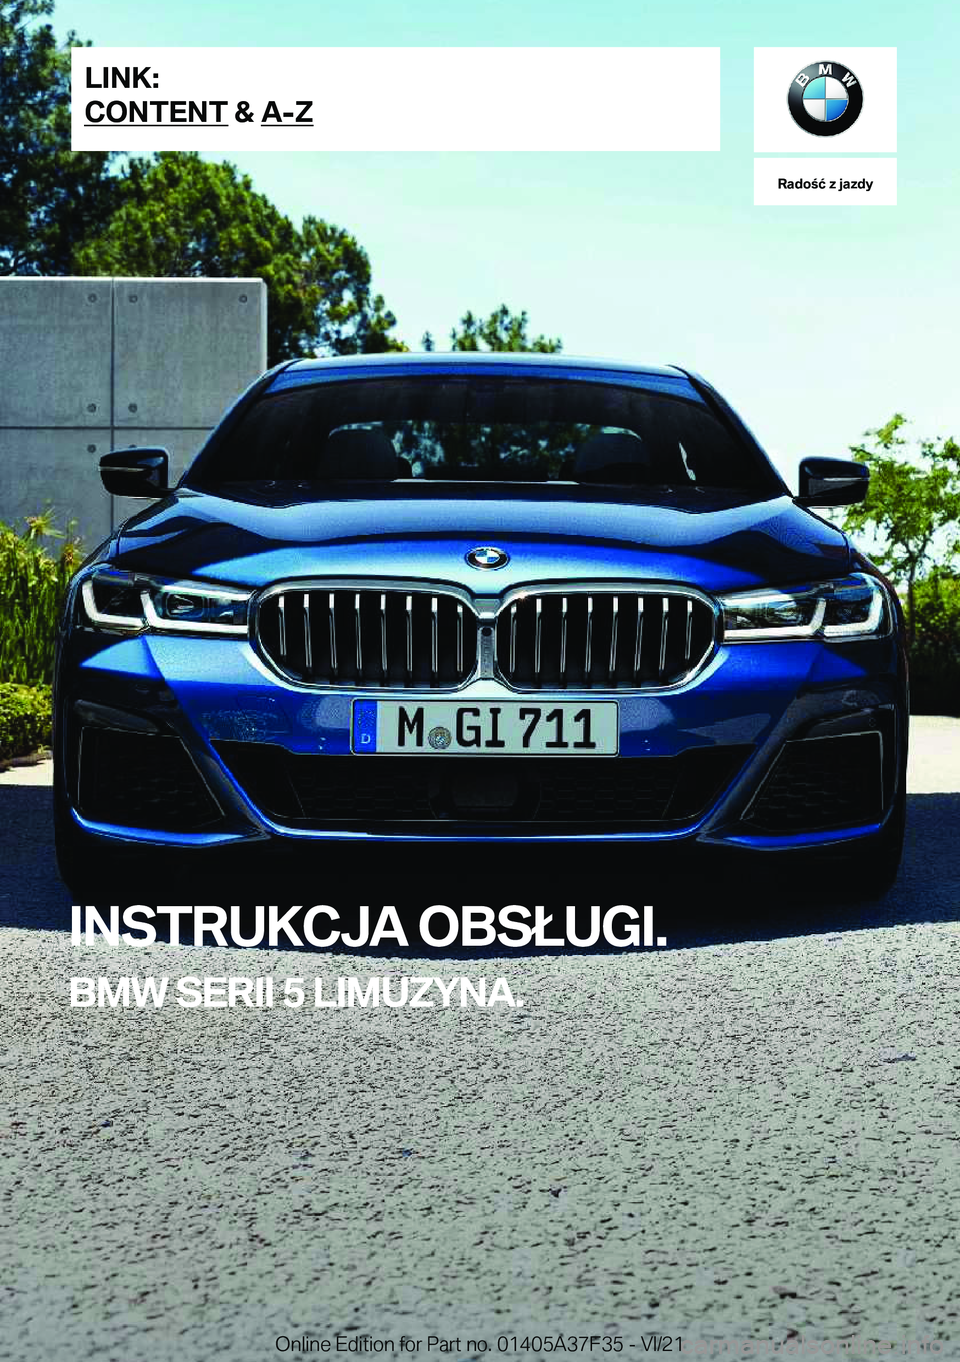 BMW 5 SERIES 2022  Instrukcja obsługi (in Polish) �R�a�d�o�ć��z��j�a�z�d�y
�I�N�S�T�R�U�K�C�J�A��O�B�S�Ł�U�G�I�.
�B�M�W��S�E�R�I�I��5��L�I�M�U�Z�Y�N�A�.�L�I�N�K�:
�C�O�N�T�E�N�T��&��A�-�Z�O�n�l�i�n�e��E�d�i�t�i�o�n��f�o�r��P�a�r�t��n�